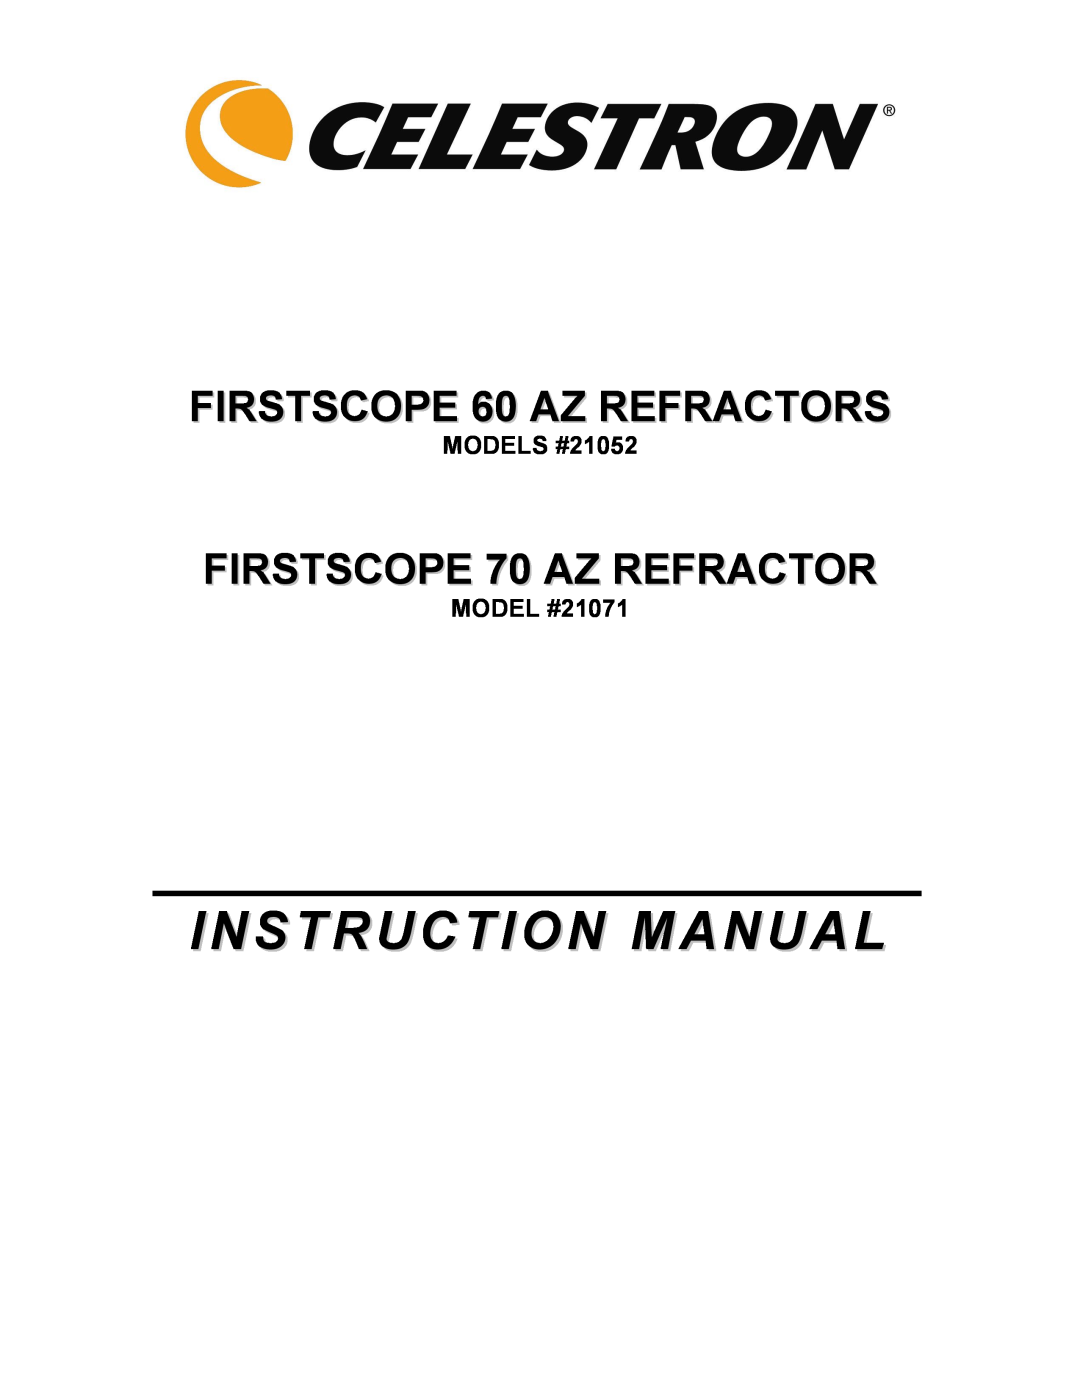 Celestron Refractor manual FIRSTSCOPE 60 AZ REFRACTORS, FIRSTSCOPE 70 AZ REFRACTOR, MODELS #21052, MODEL #21071 